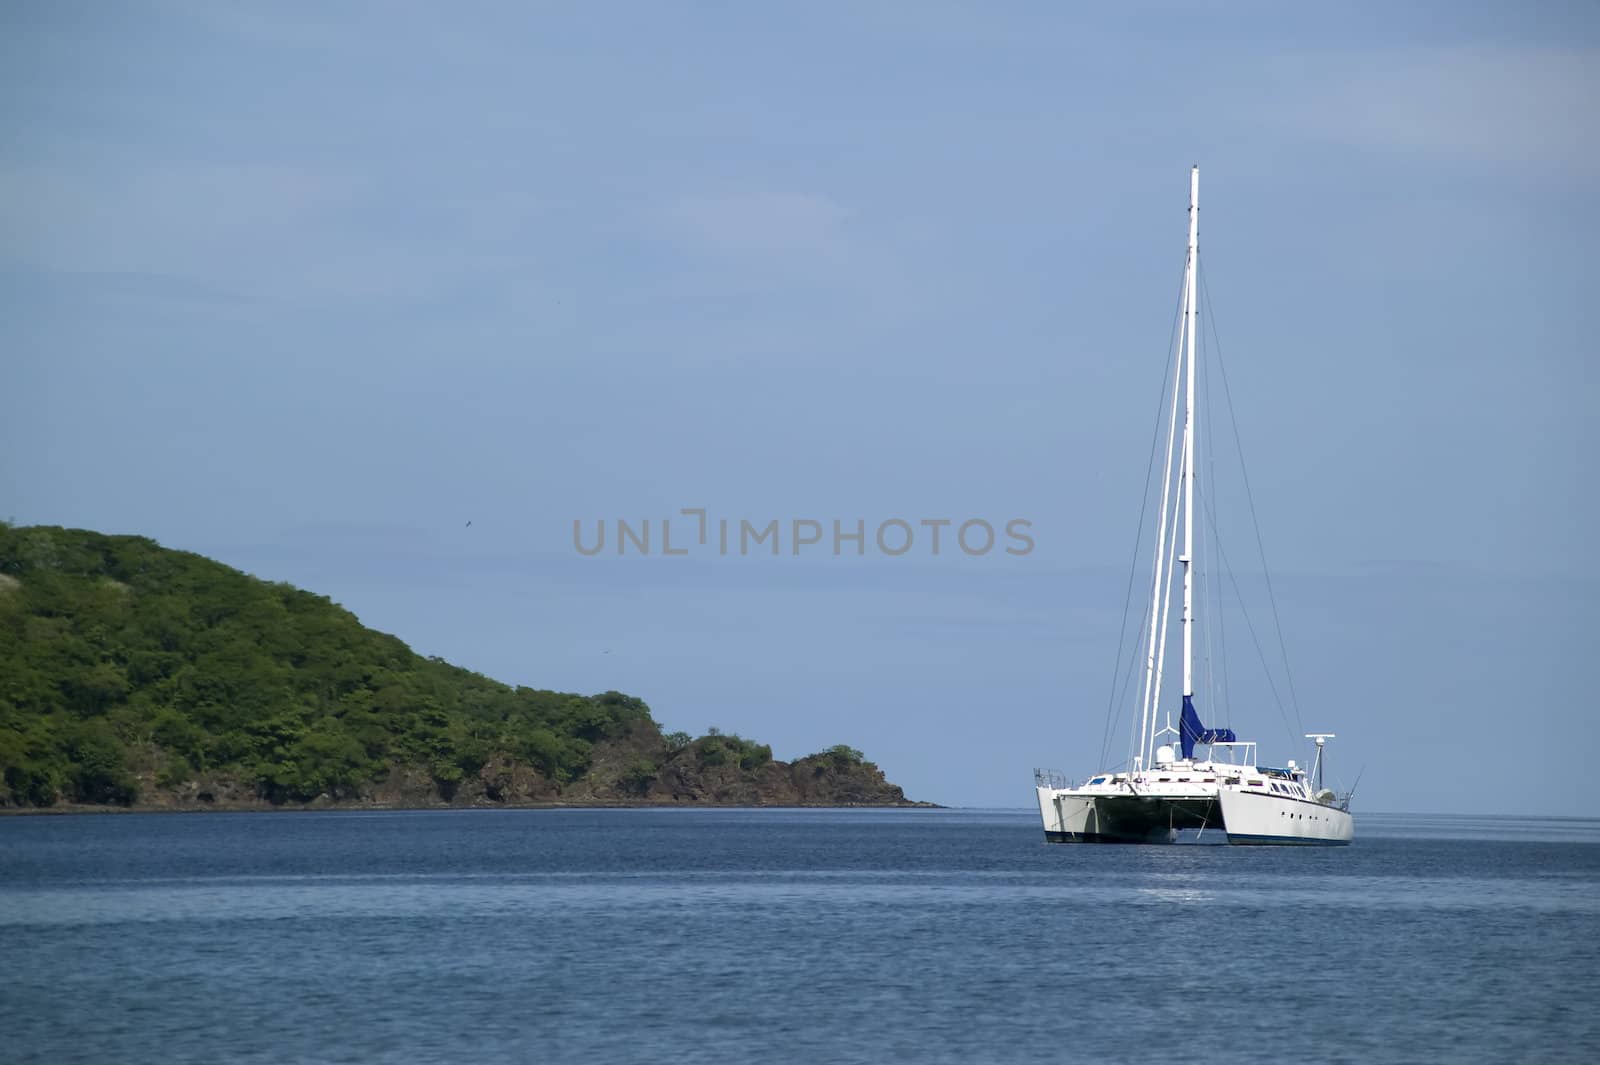 Expensive catamaran off shore on the horizon 